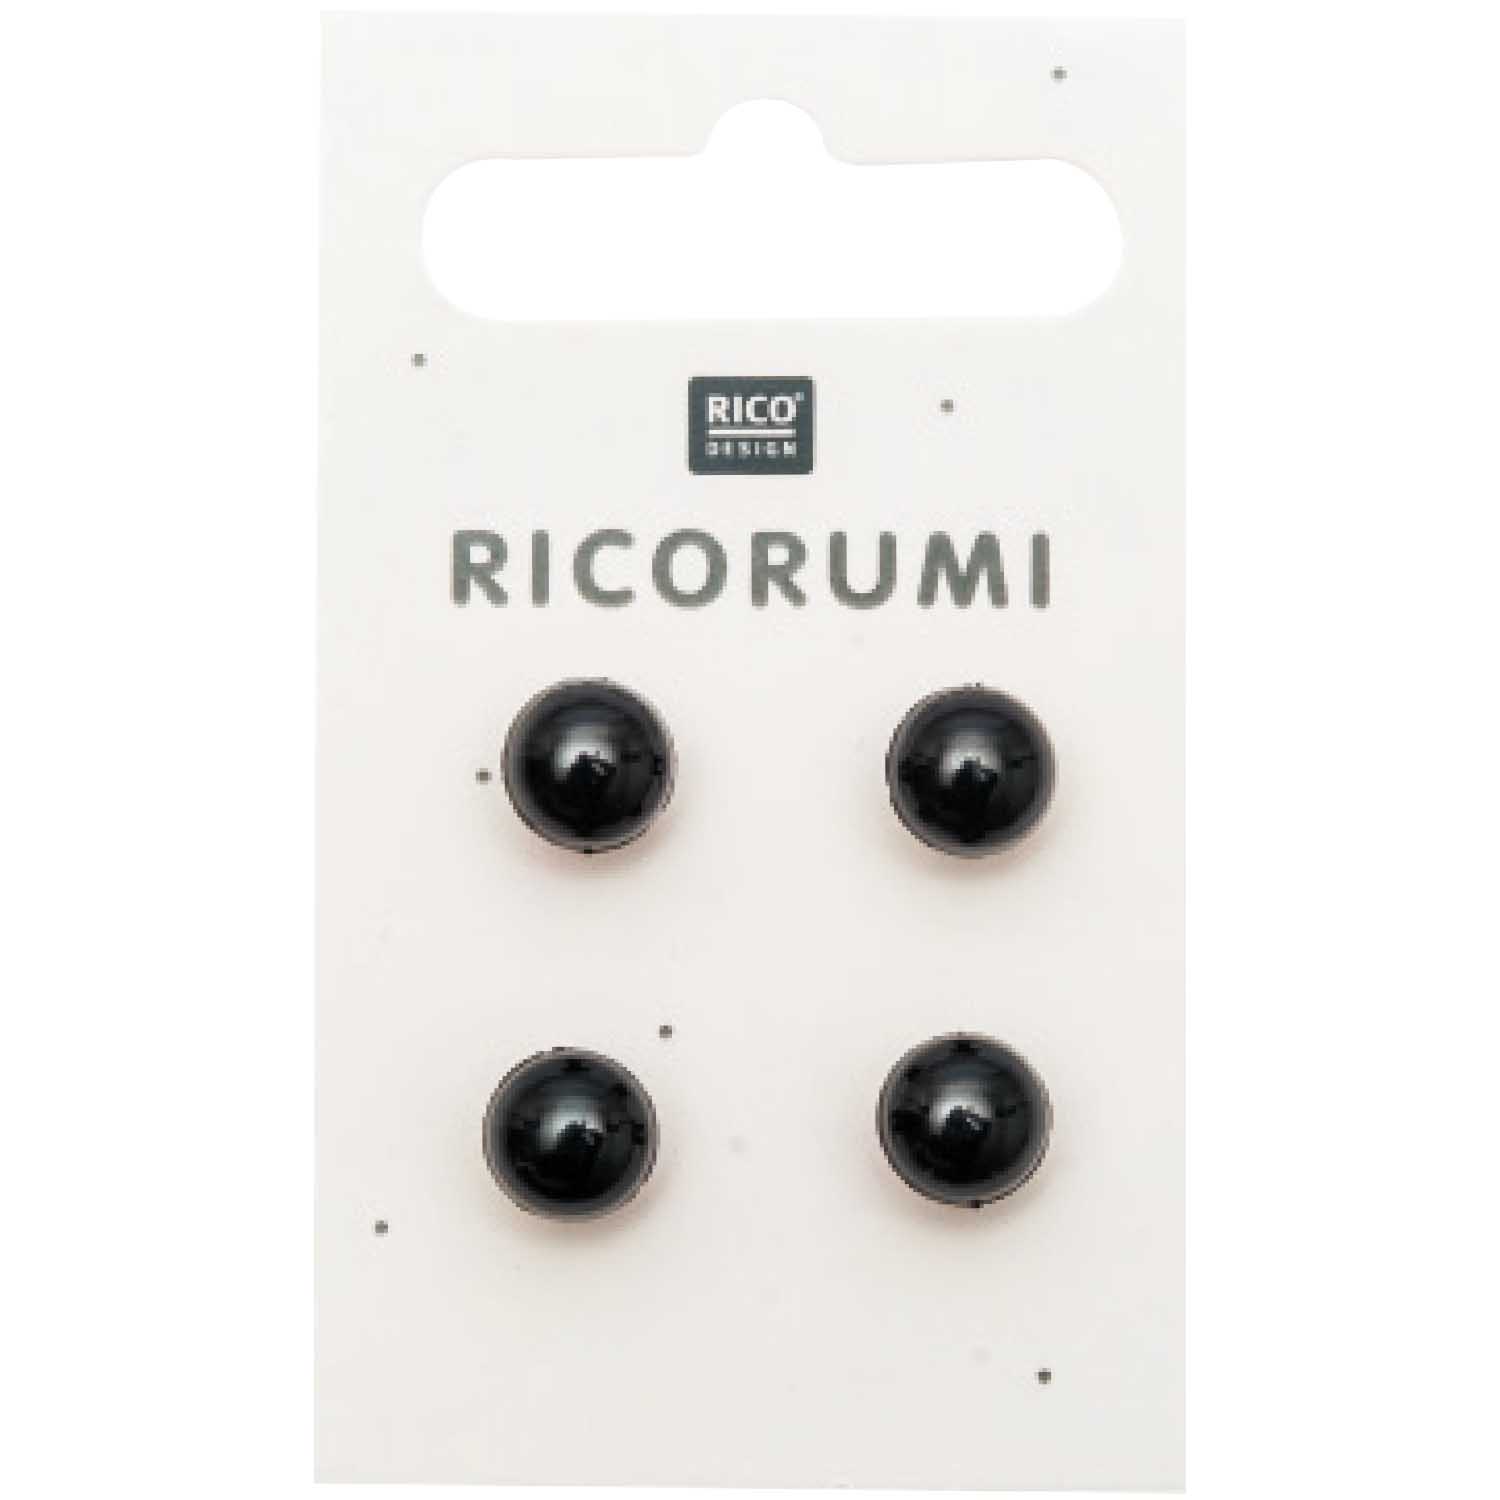 rico Ricorumi - Knopfaugen 8.5mm - 4er Set